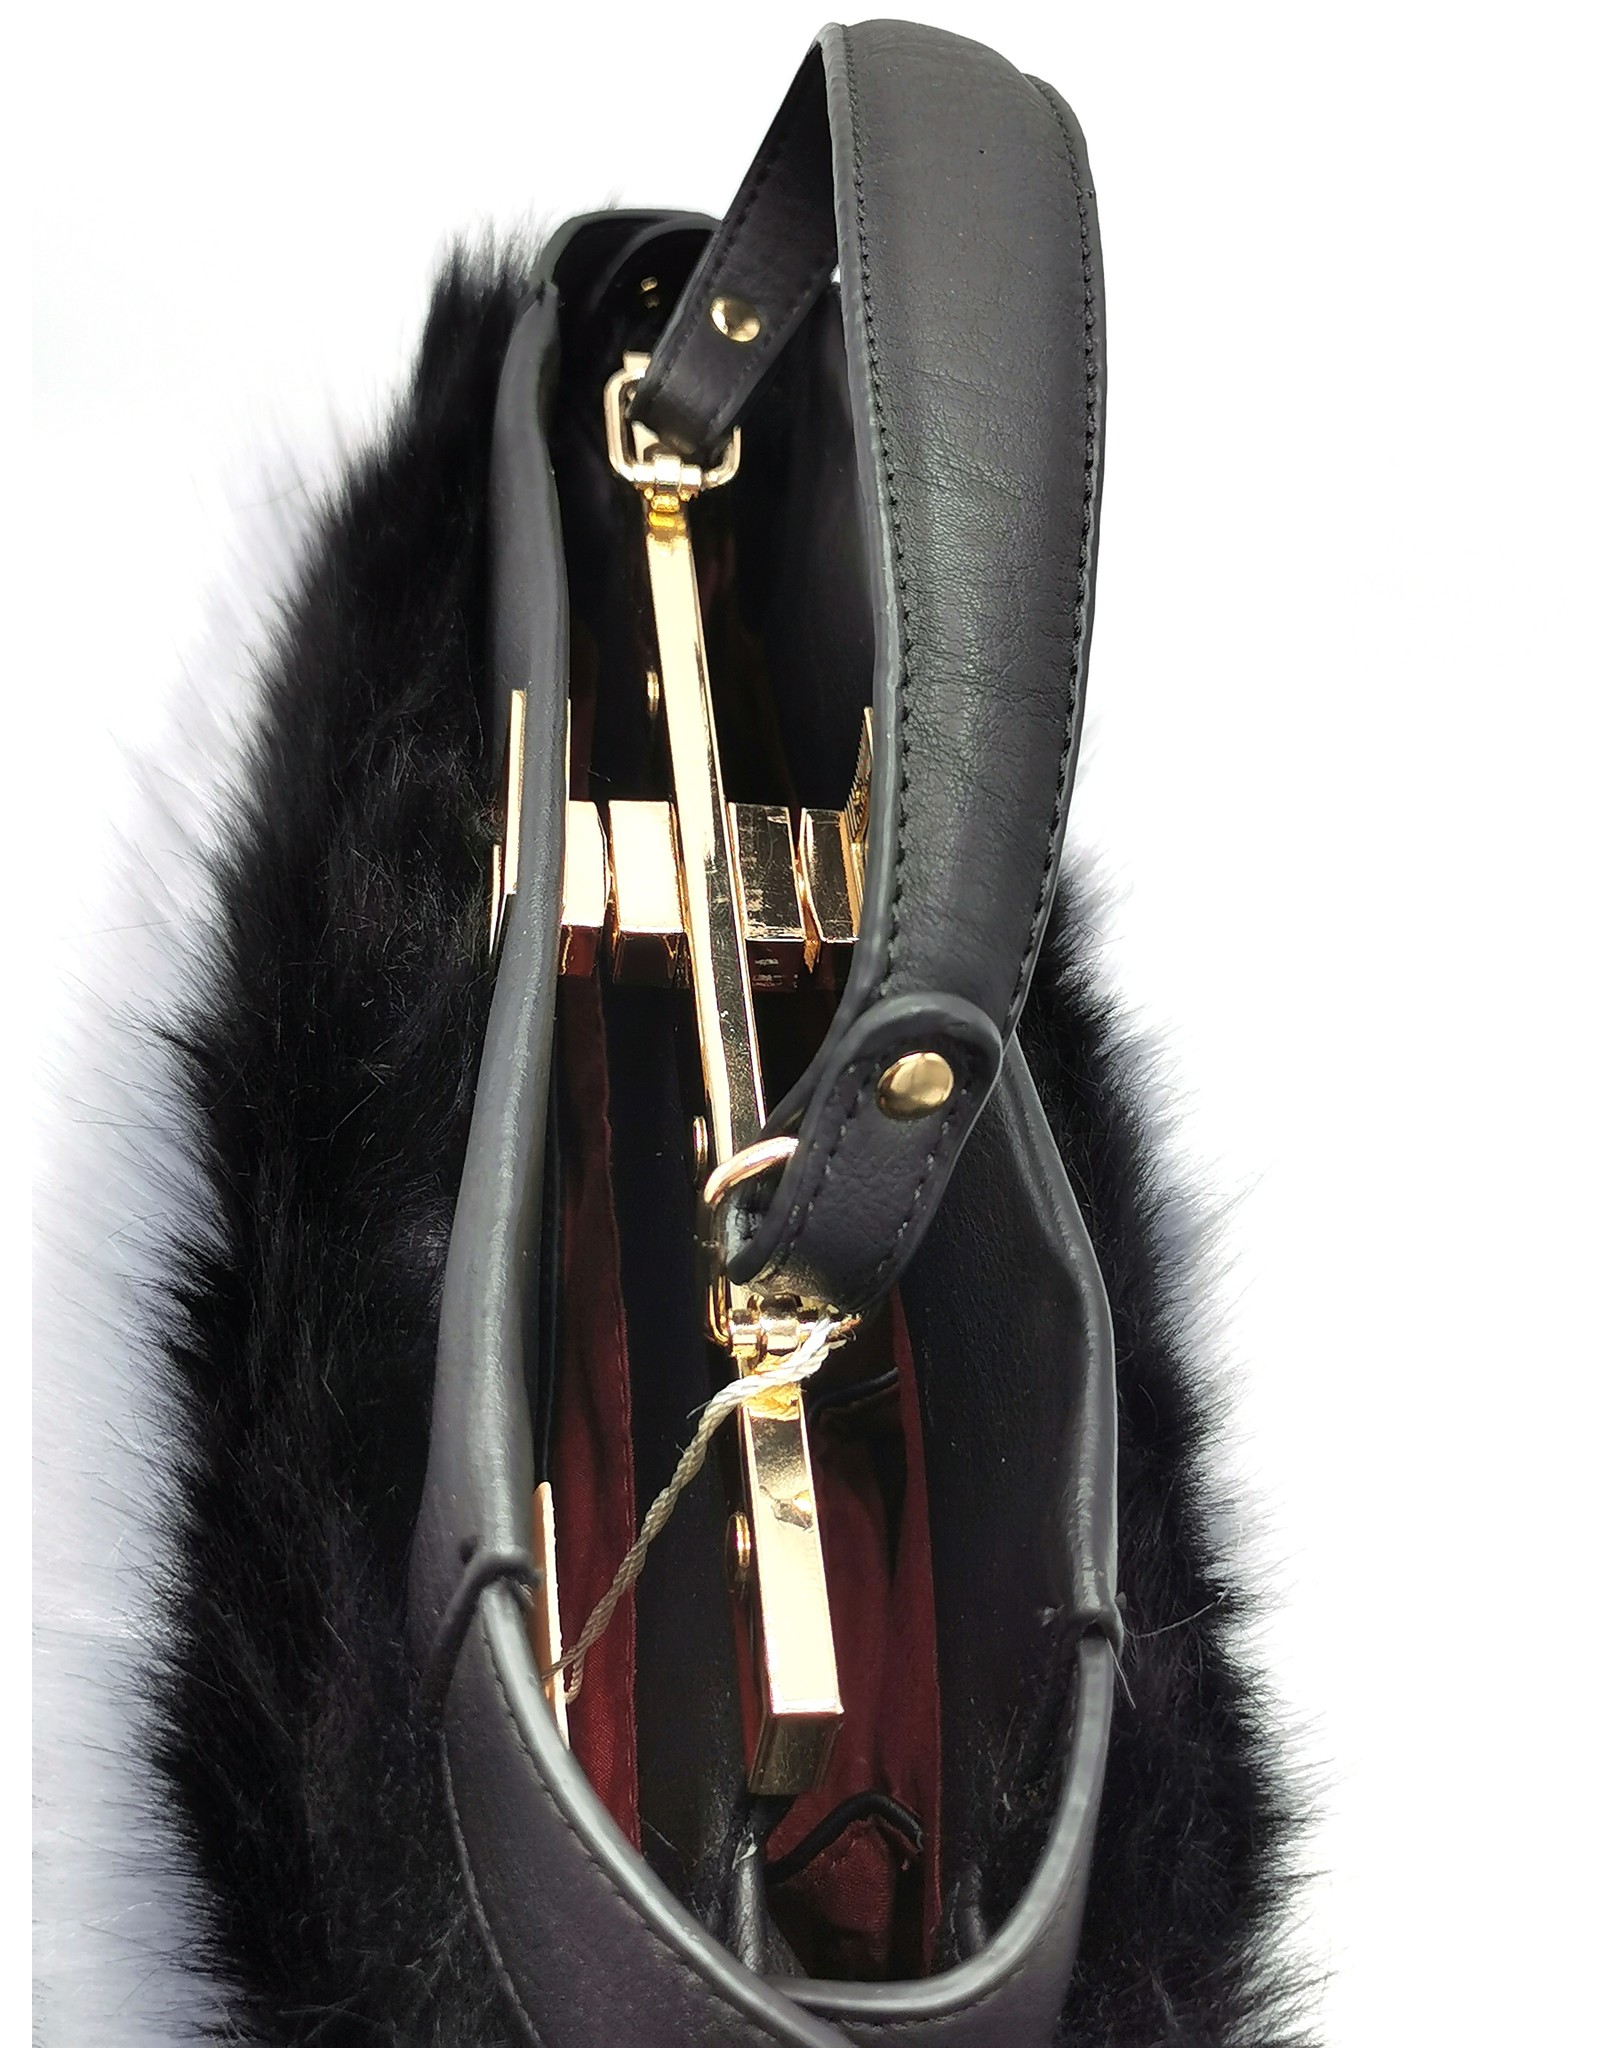 Giuliano Fashion bags - Giuliano Handbag Fur Black Grey